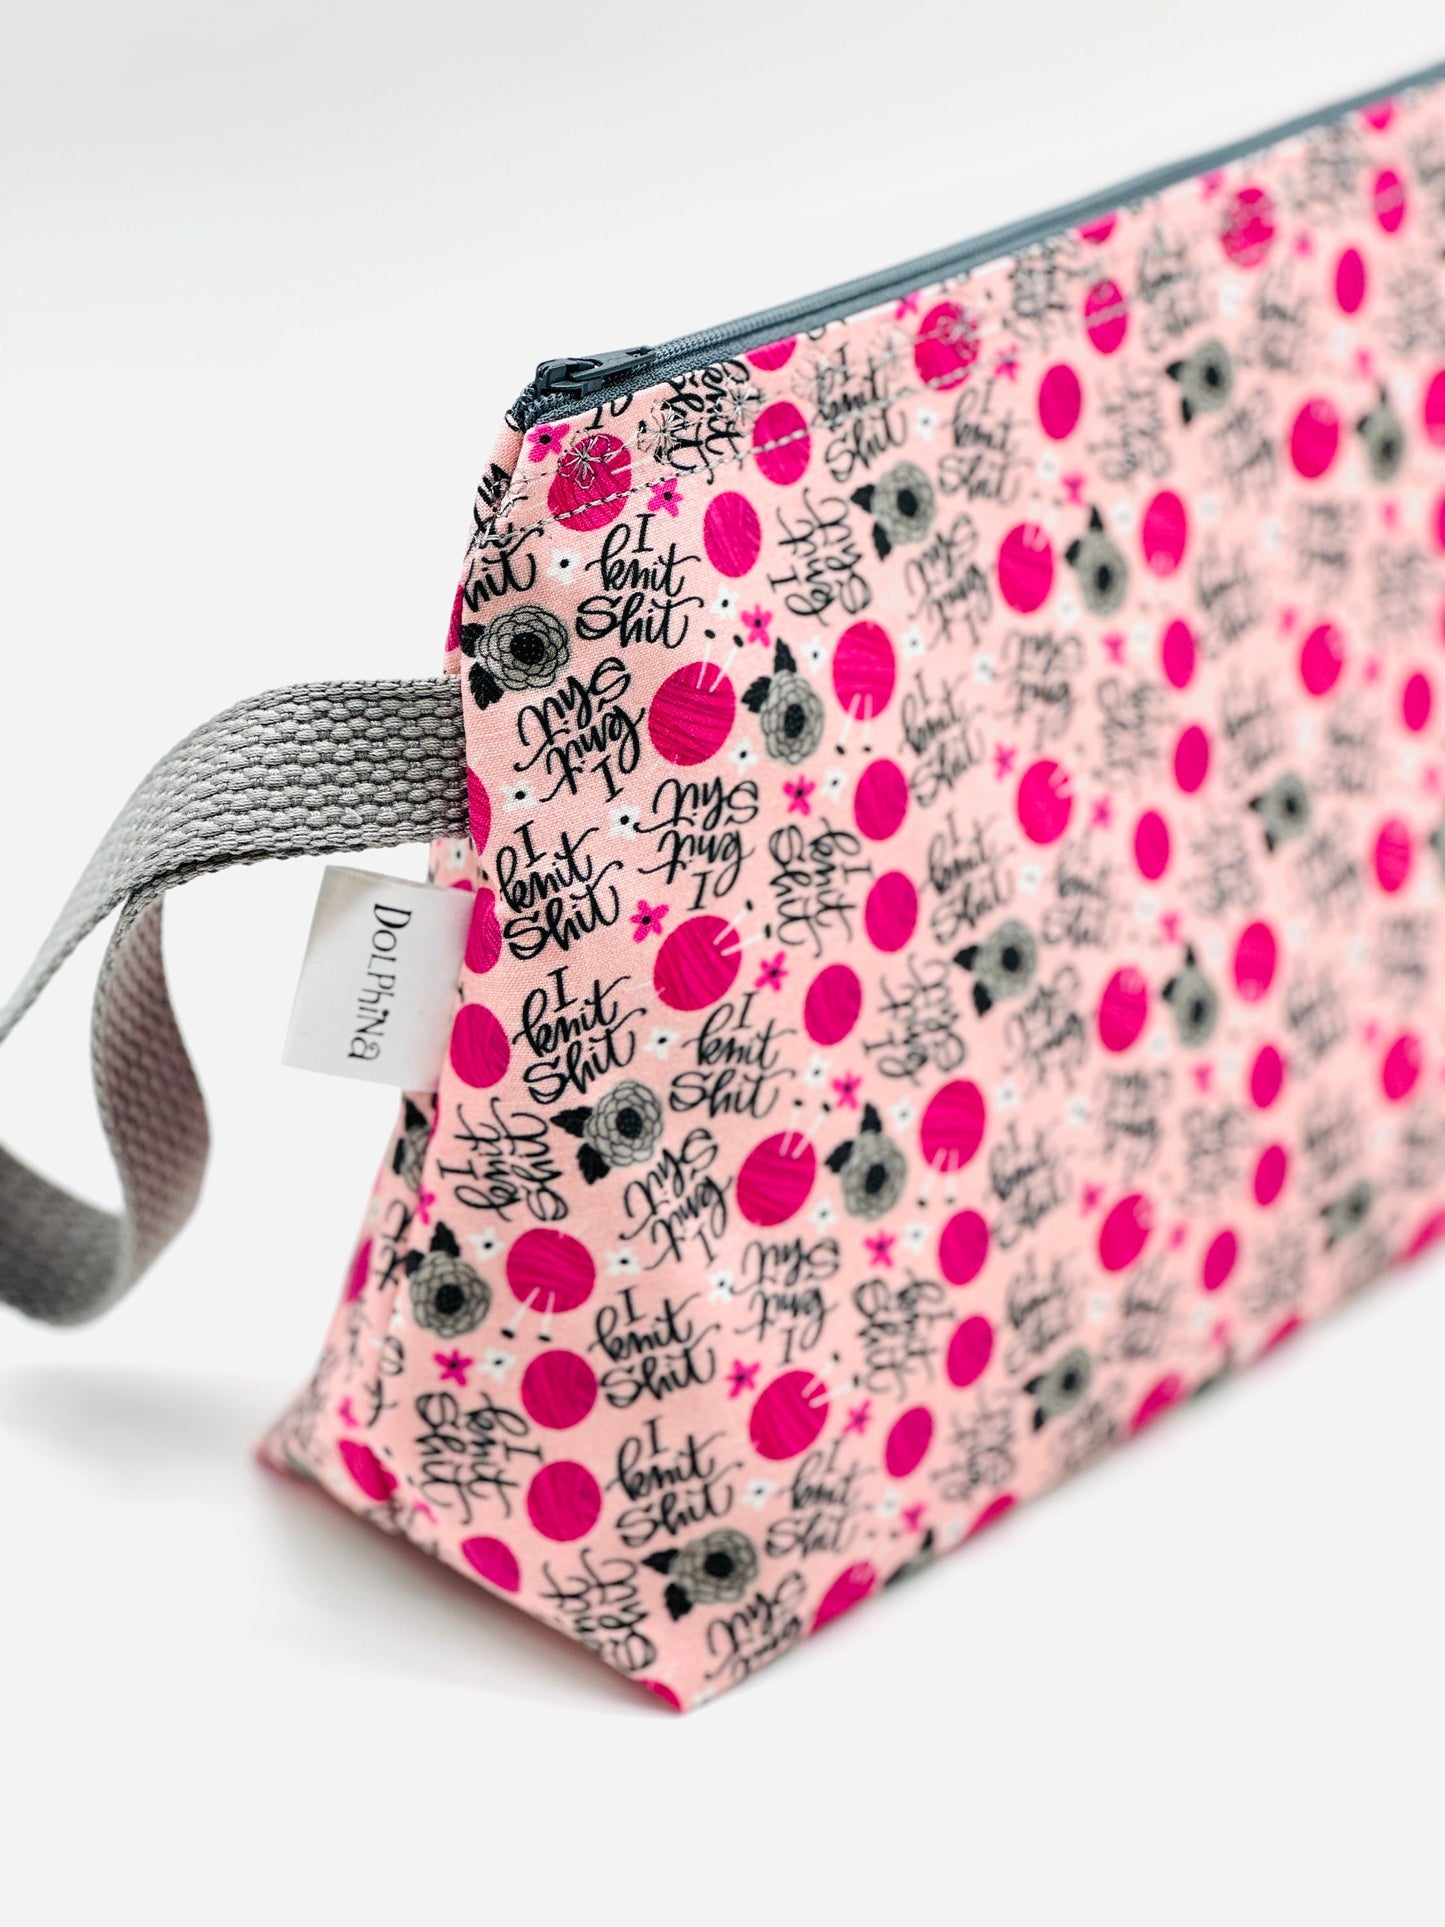 Large project bag -  I Knit sh!@#% (pink)